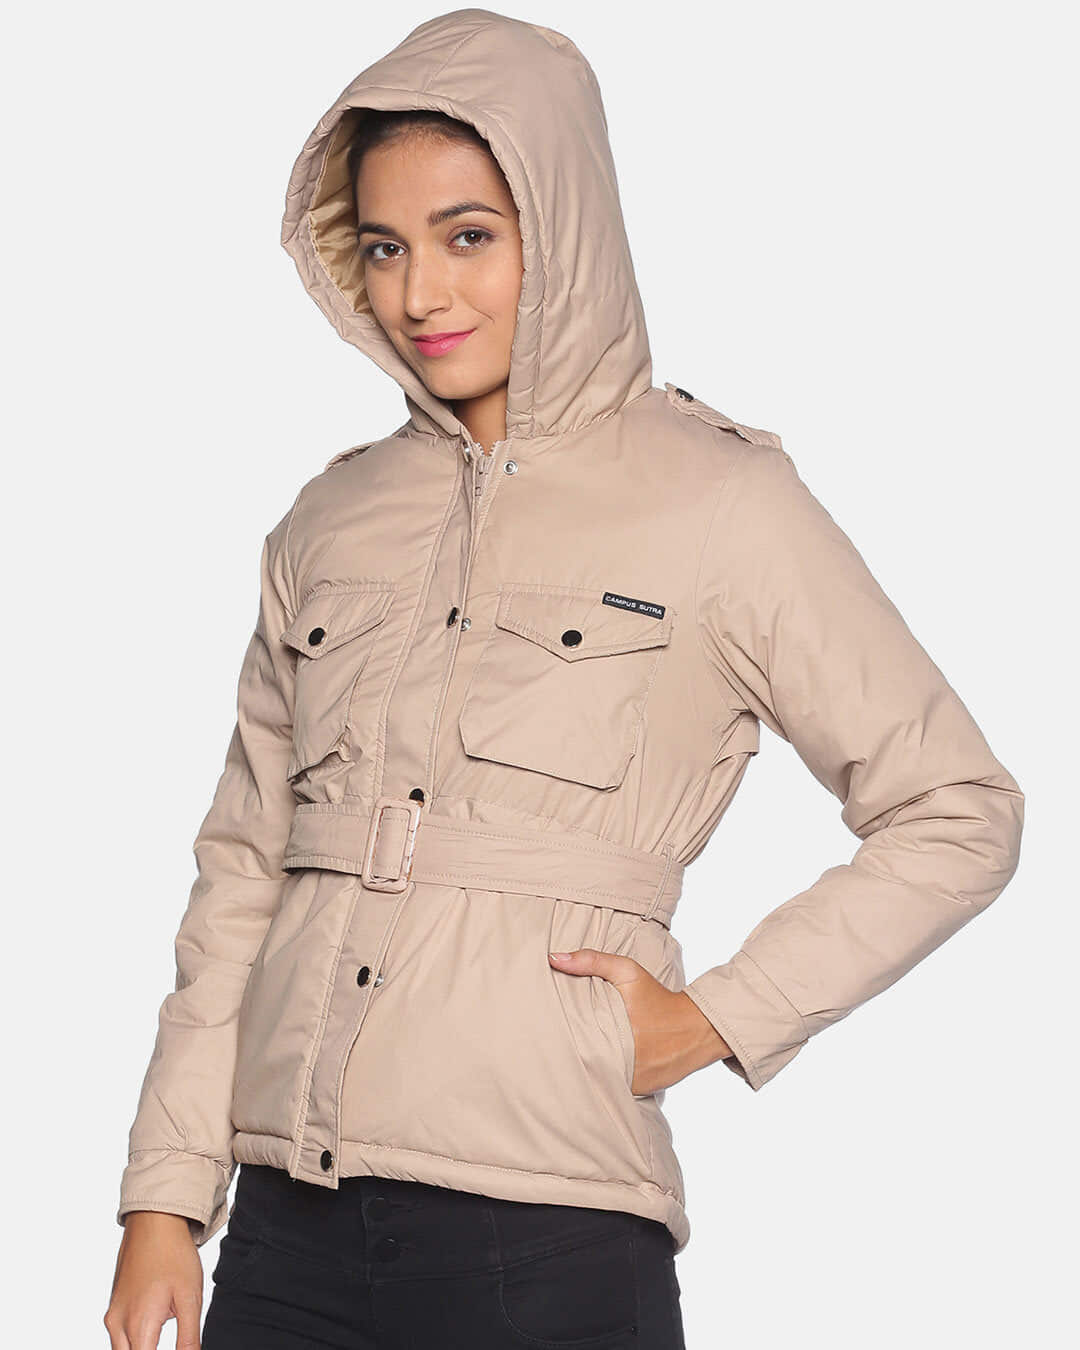 Shop Women's Solid Stylish Casual Bomber Jacket-Back